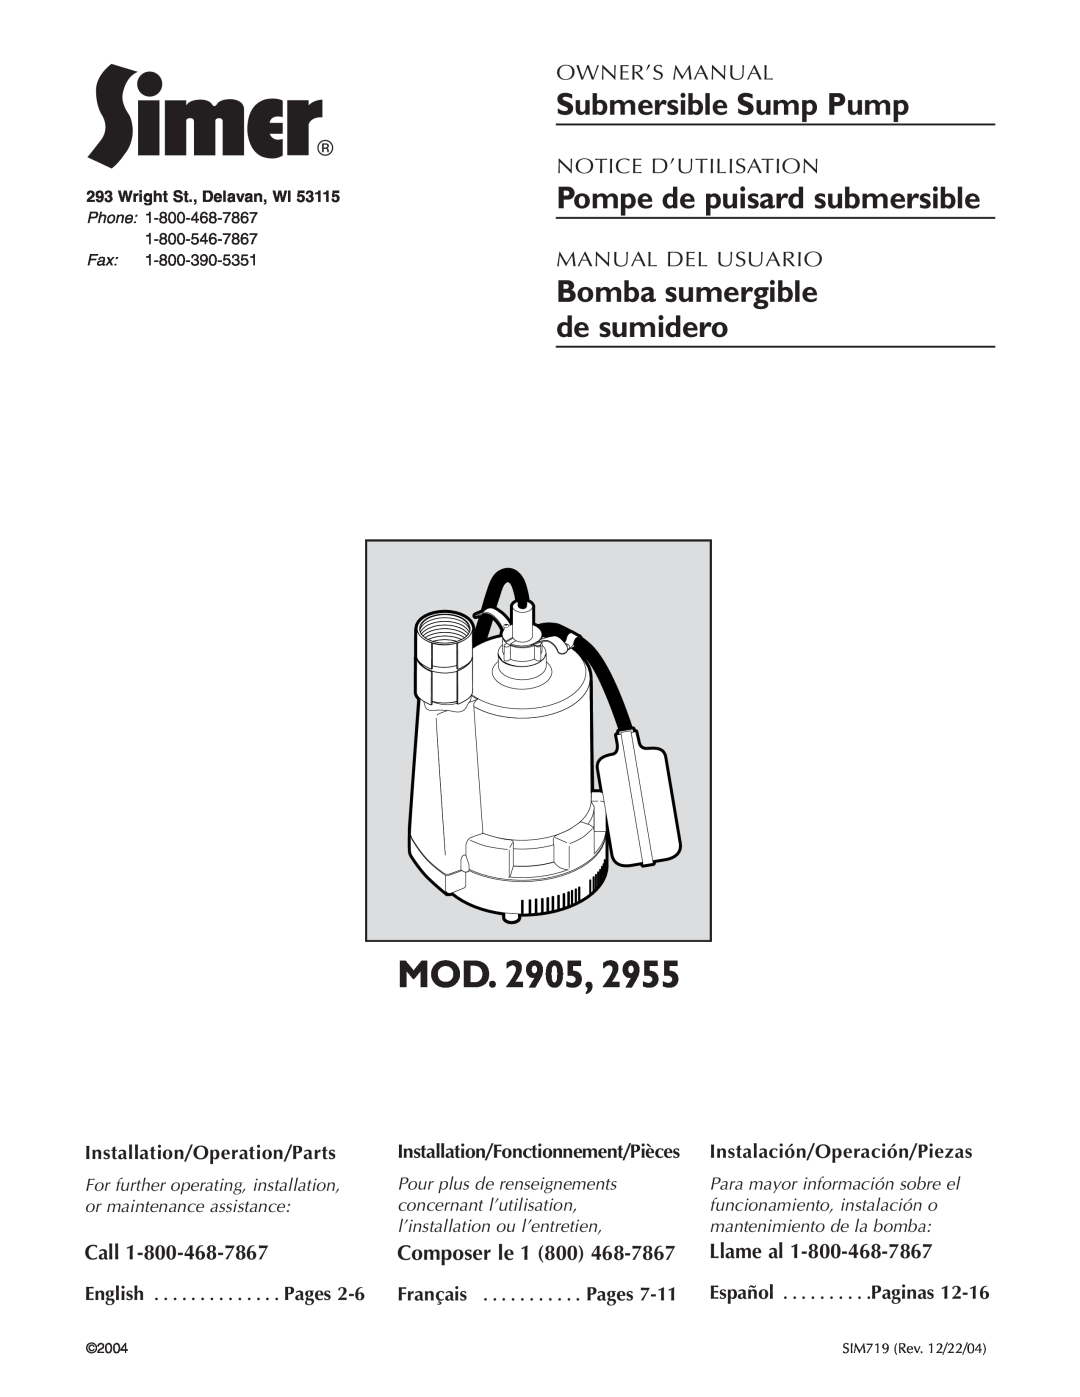 Simer Pumps 2905 owner manual Submersible Sump Pump, Pompe de puisard submersible, Call, Composer le, Llame al, Paginas 